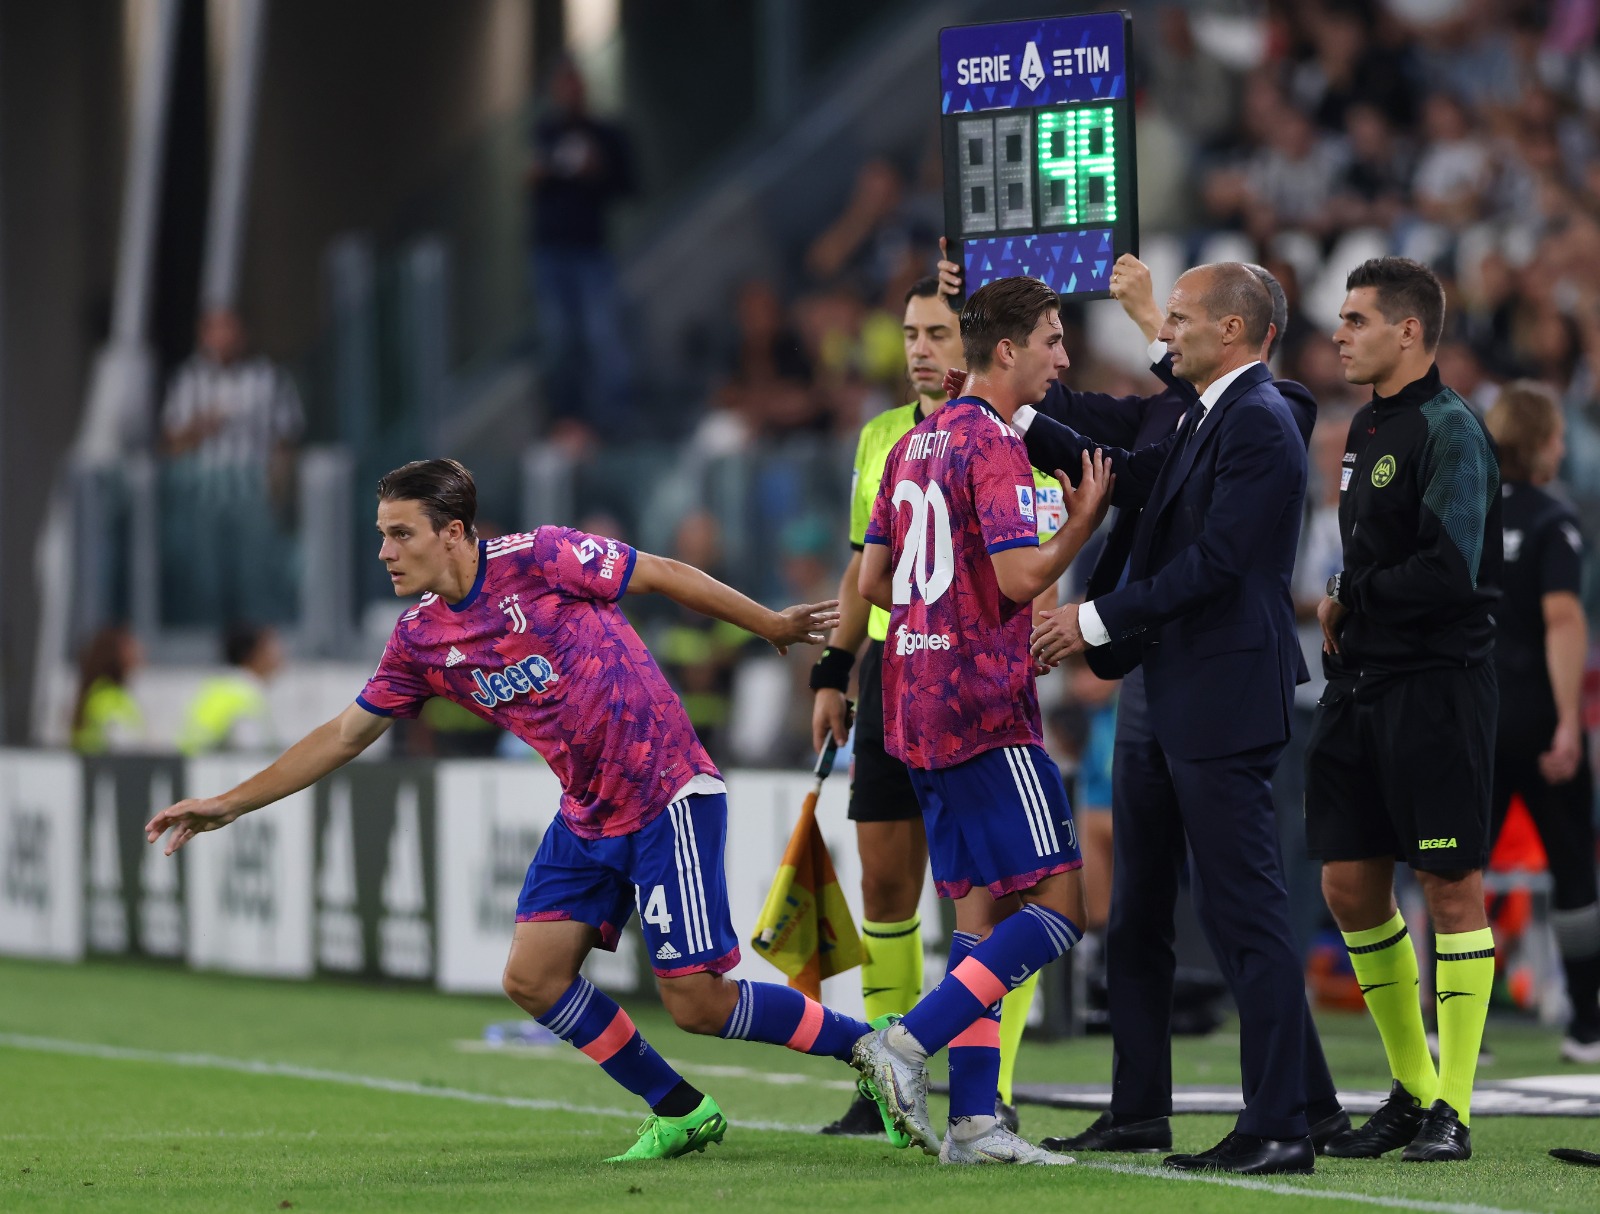 The transfer market, the Italian League half knocks on Juventus’ door for the midfielder: details